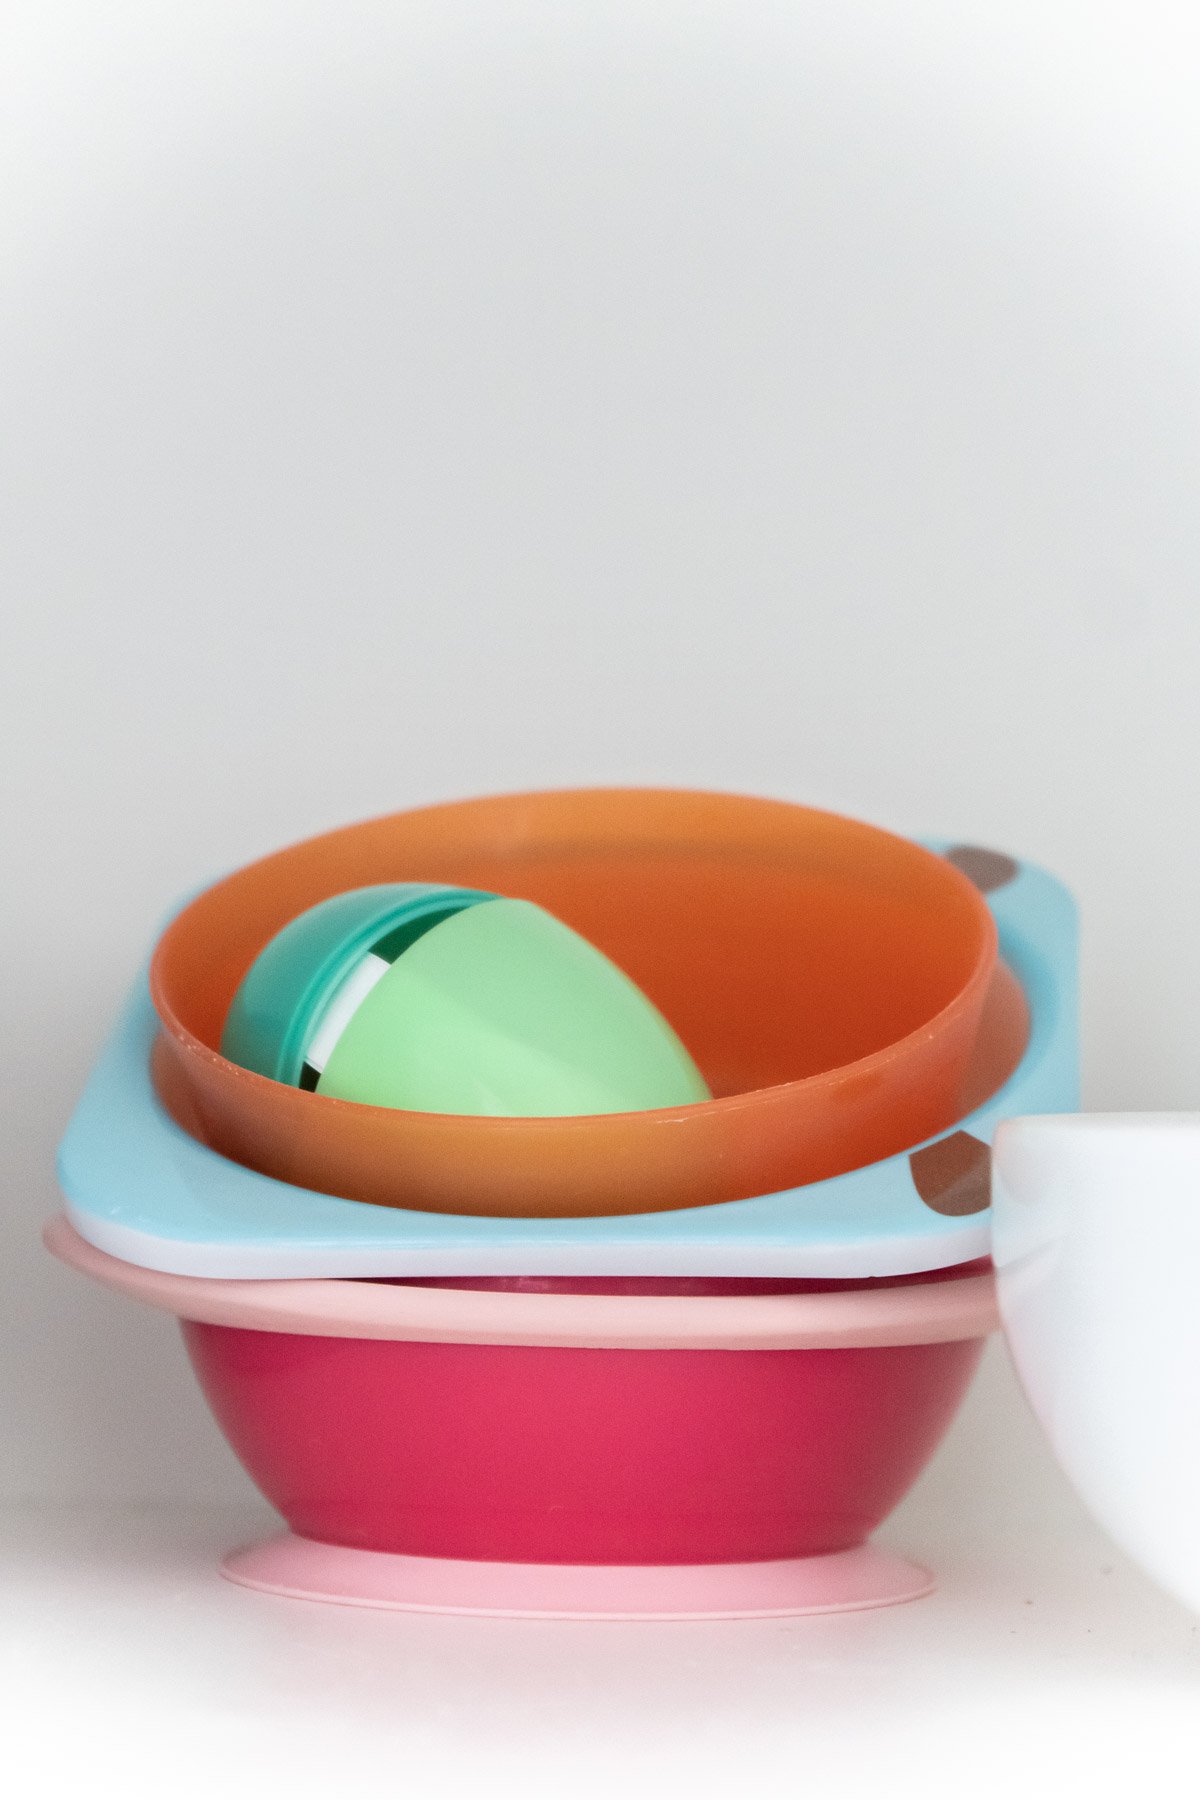 Easter egg hidden in a plastic bowl